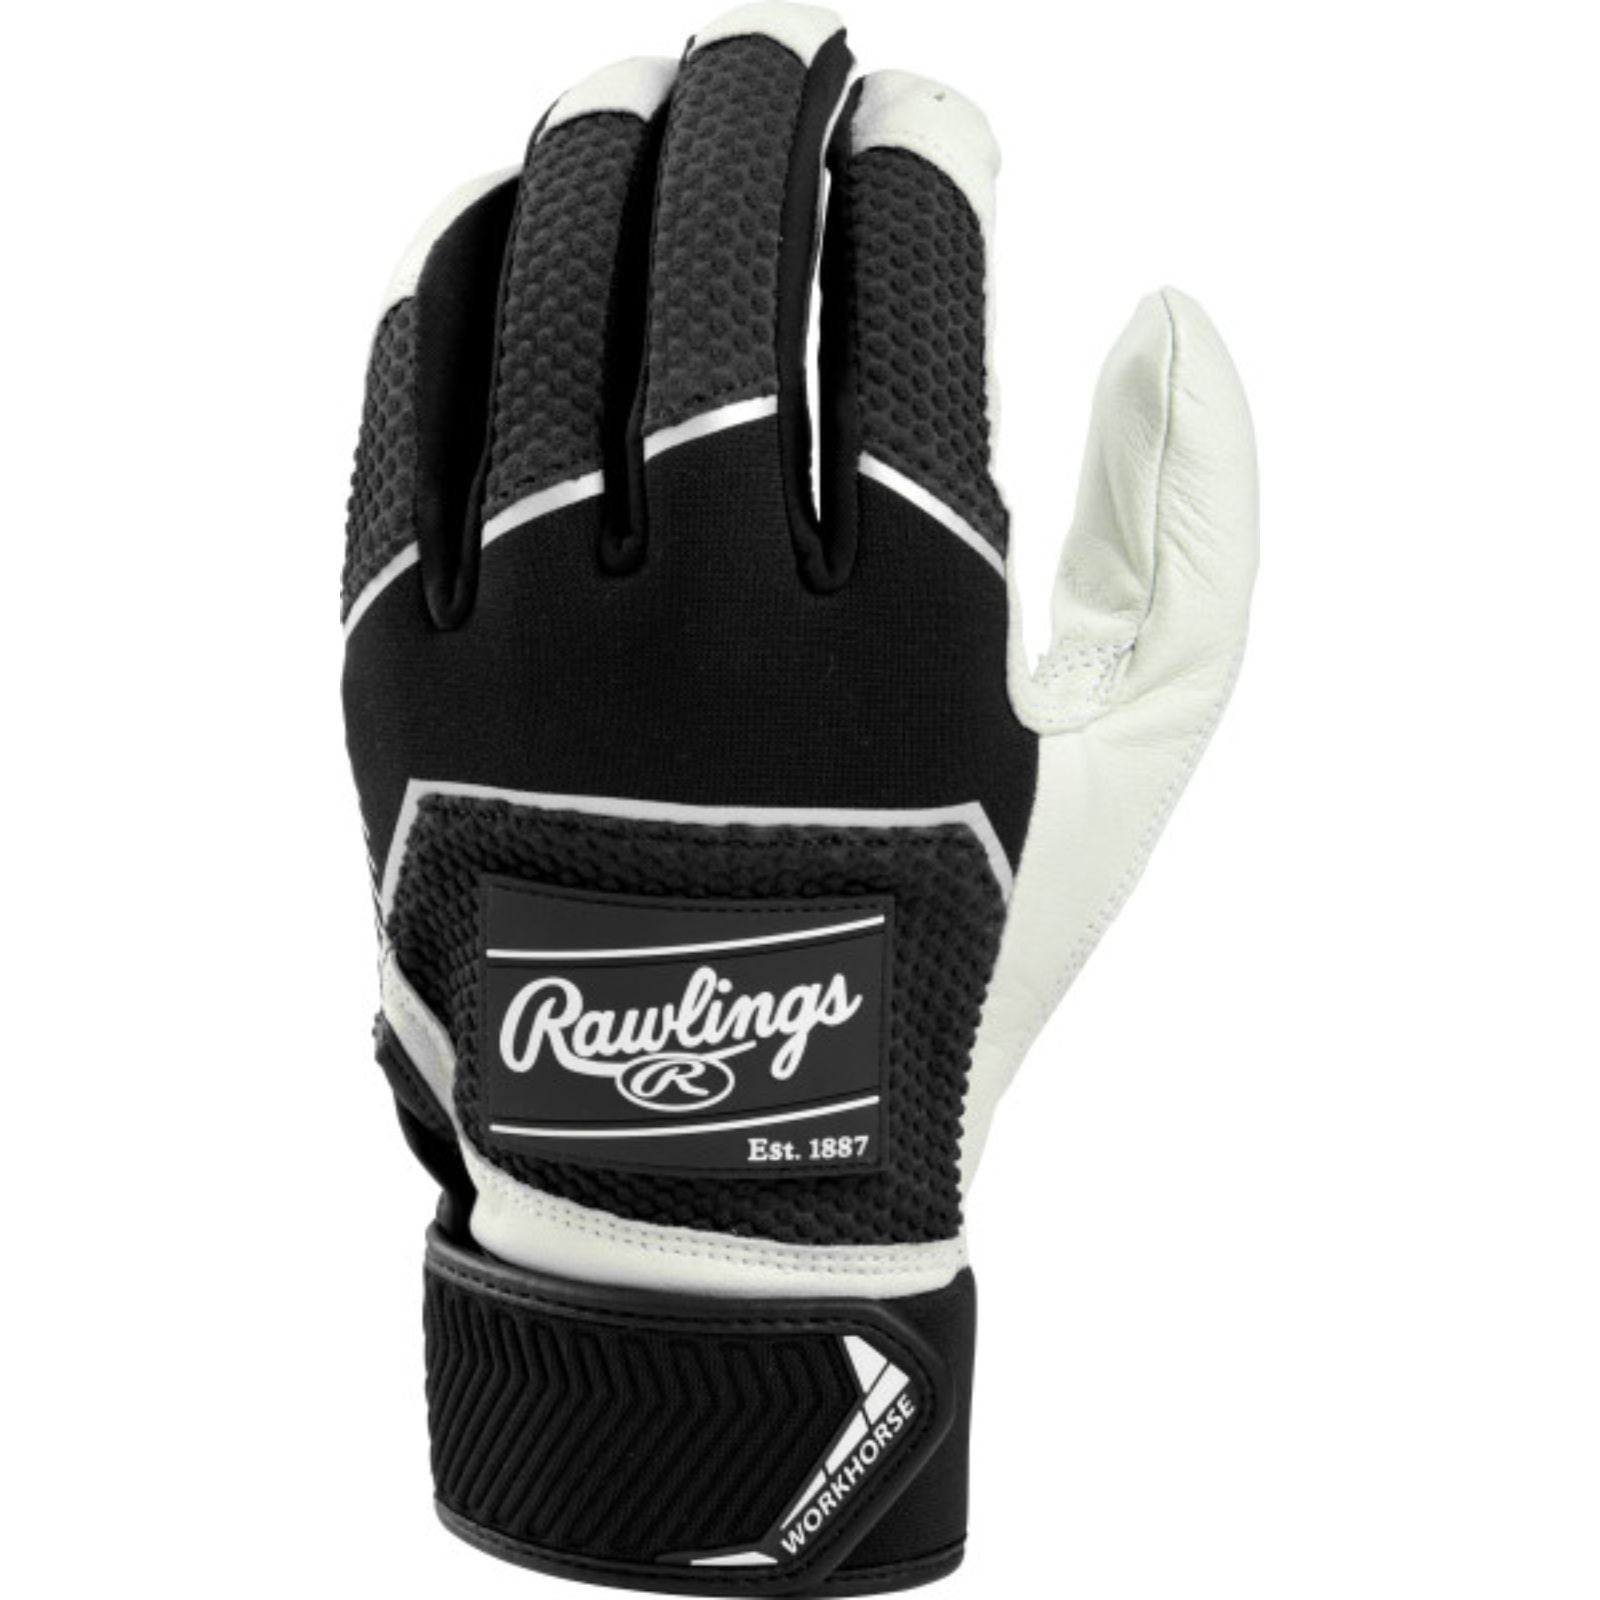 New pair Rawlings Raptor baseball batting gloves youth small RRBGY glove set 